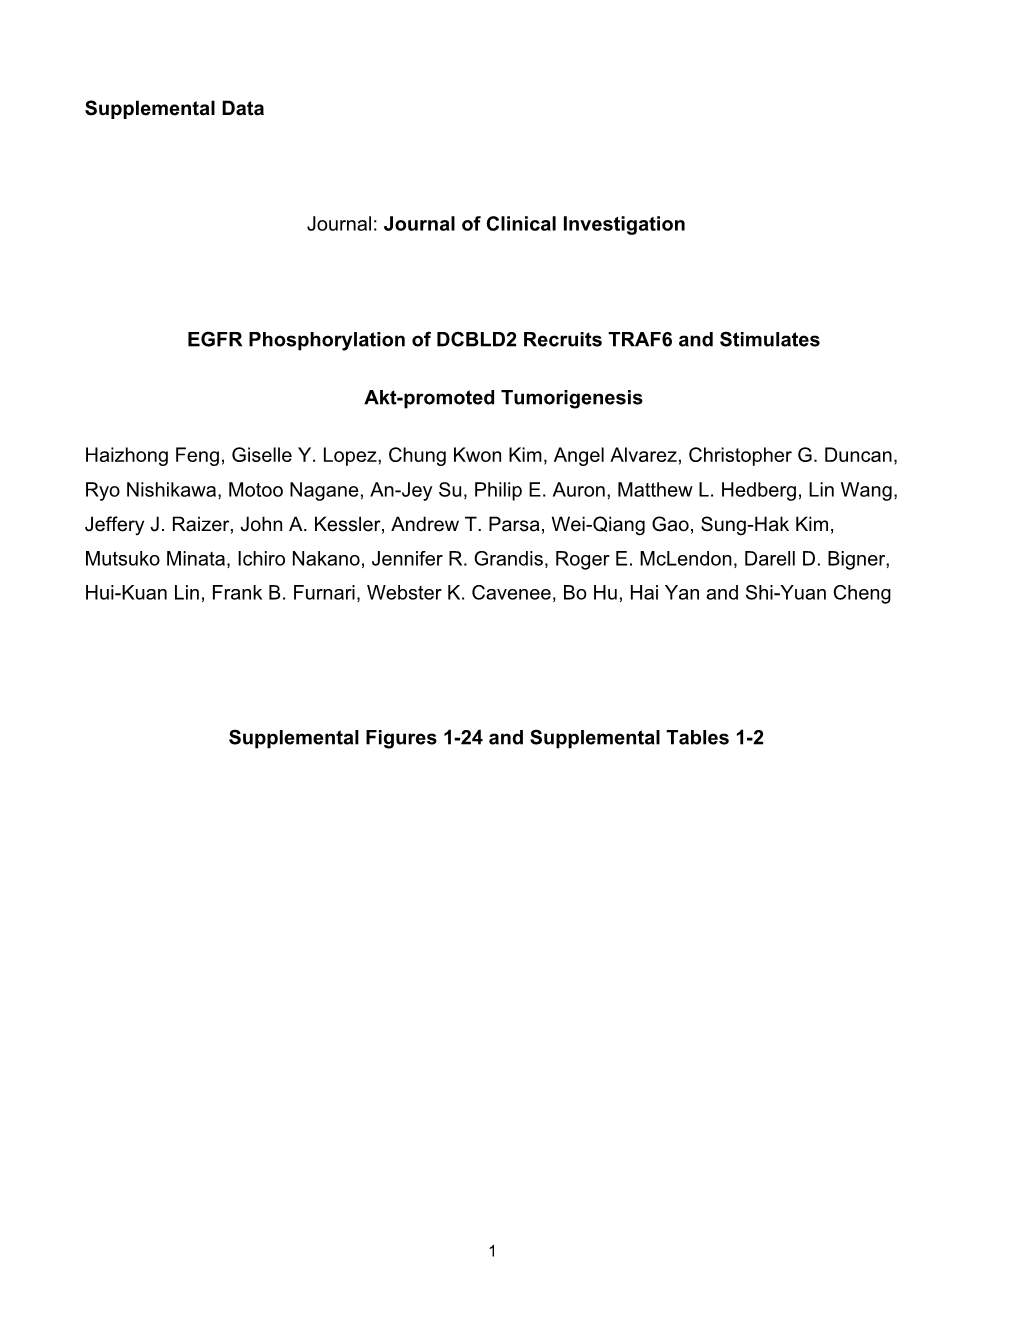 Journal of Clinical Investigation EGFR Phosphorylation of DCBLD2